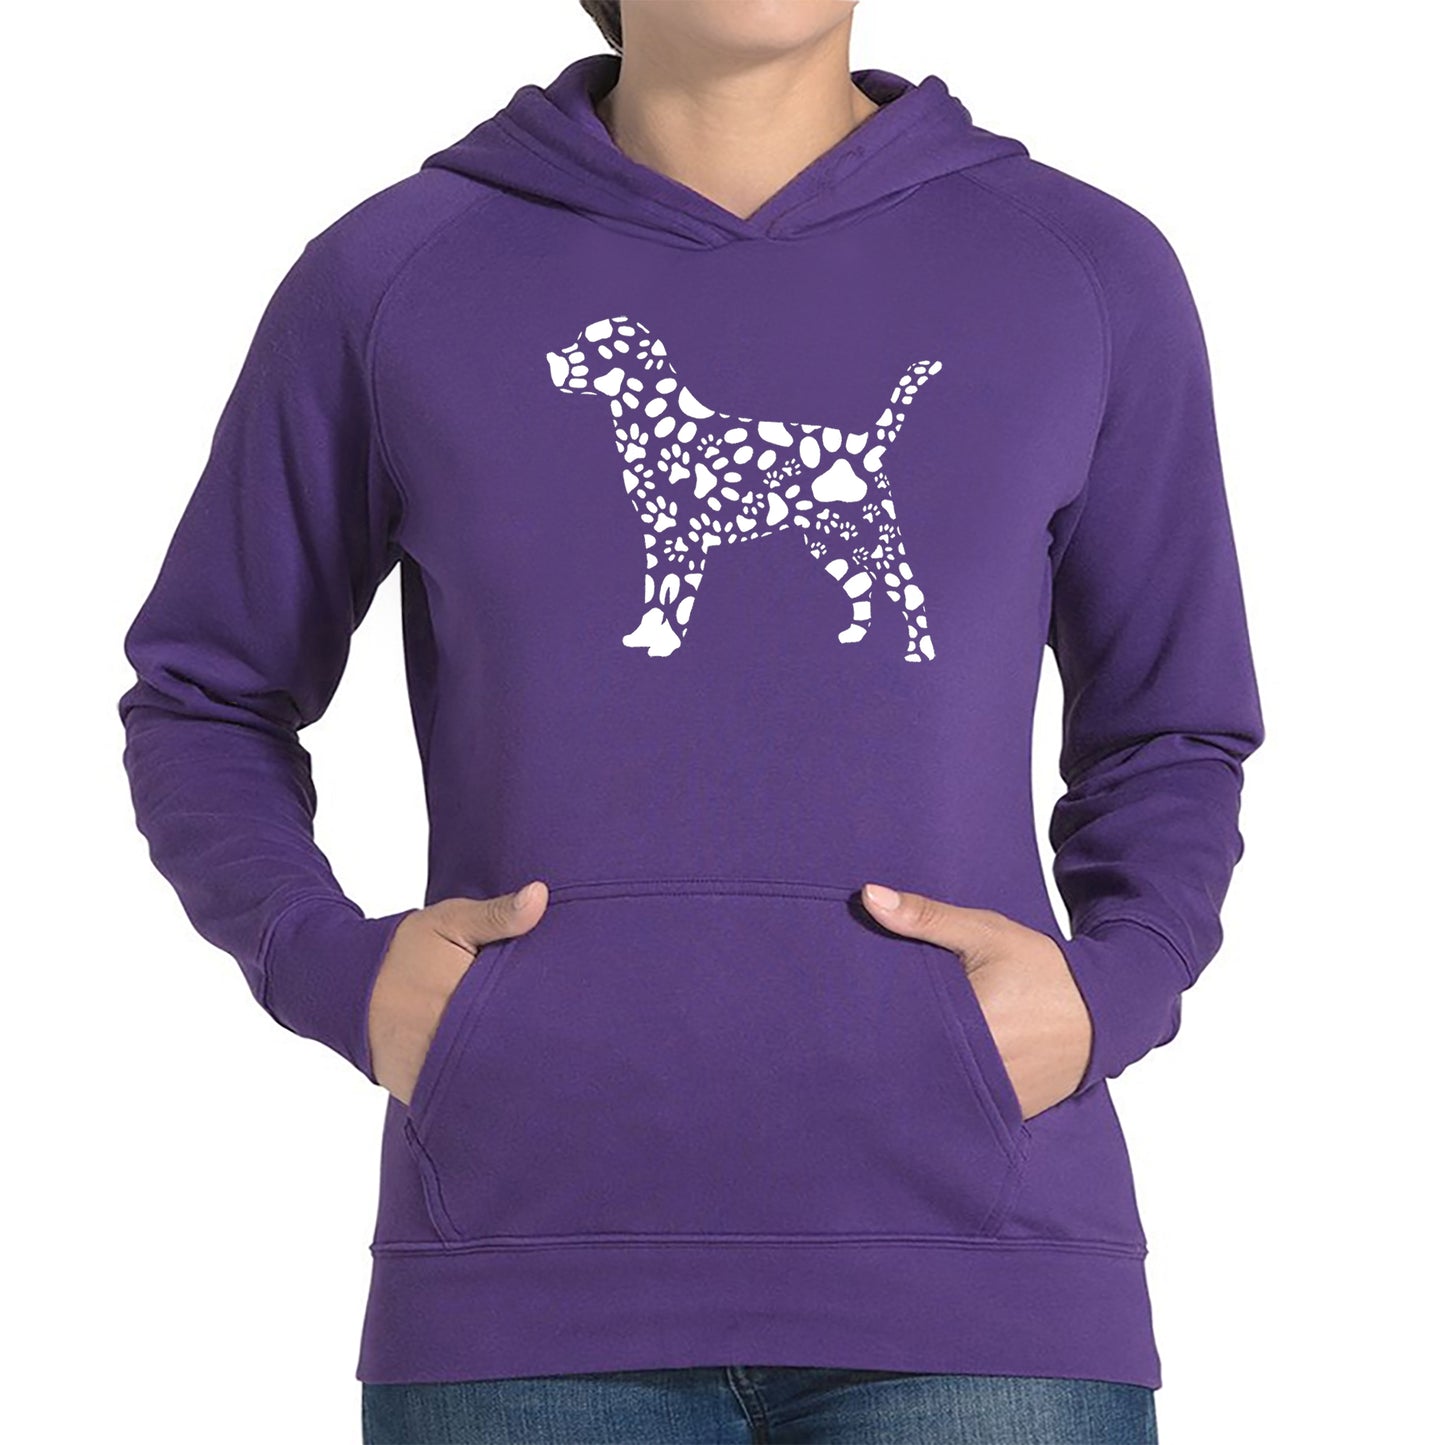 Dog Paw Prints  - Women's Word Art Hooded Sweatshirt